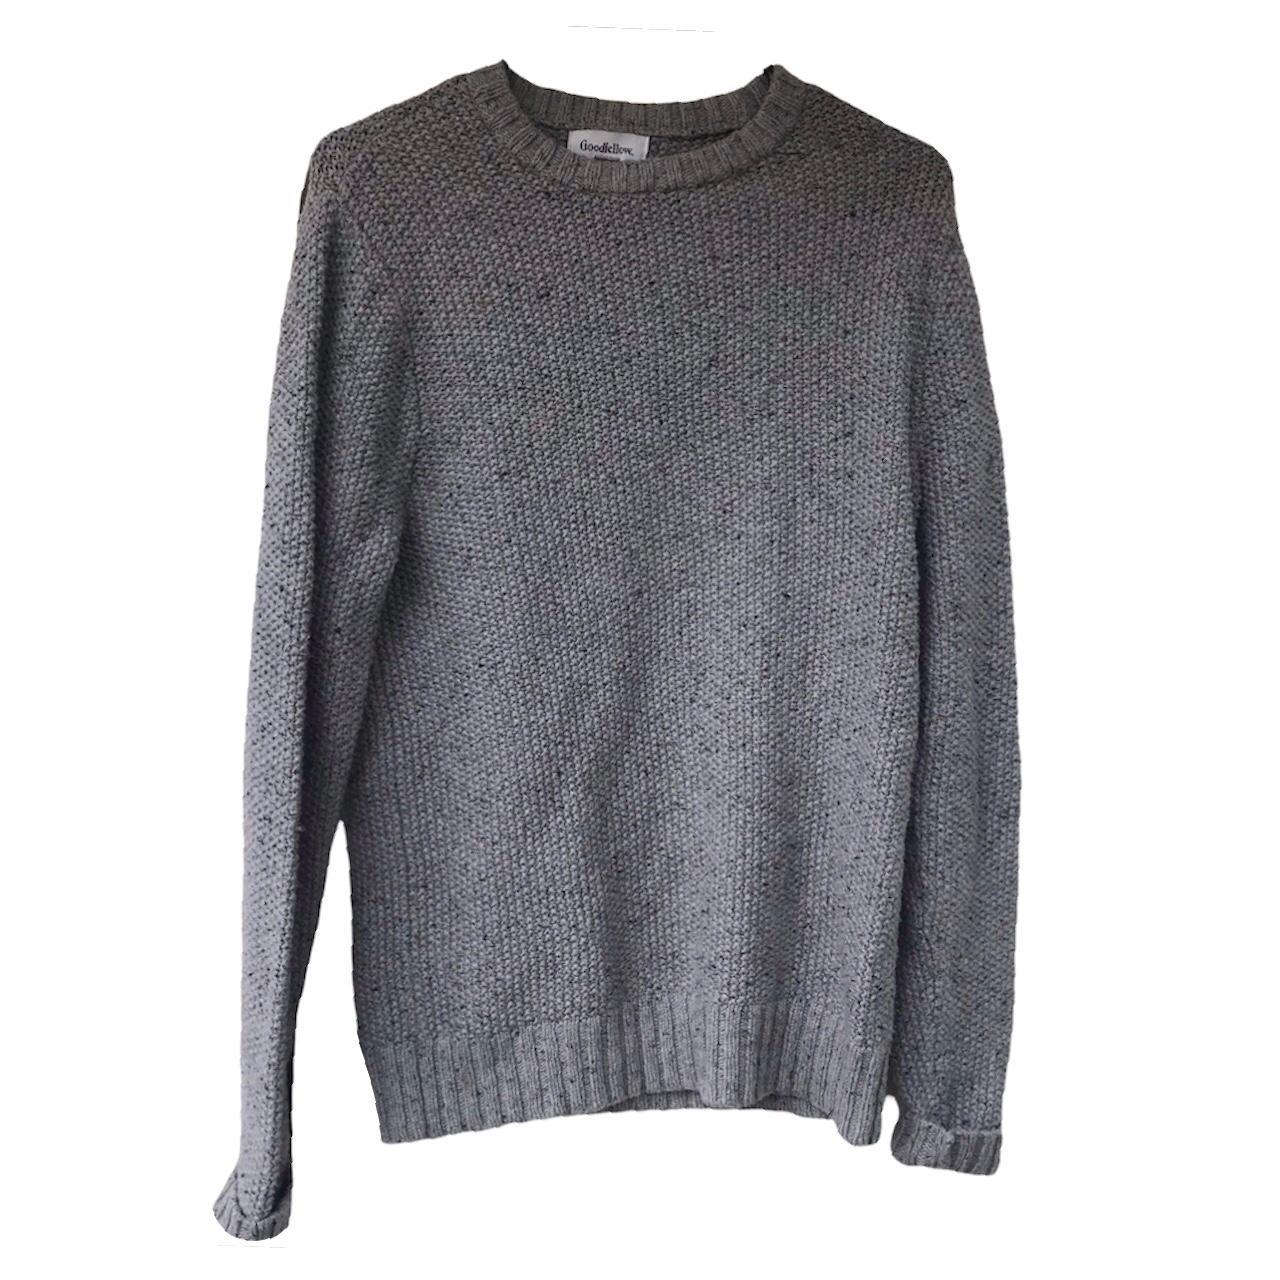 Grey knit sweater. Size men’s small. #sweater #knit... - Depop